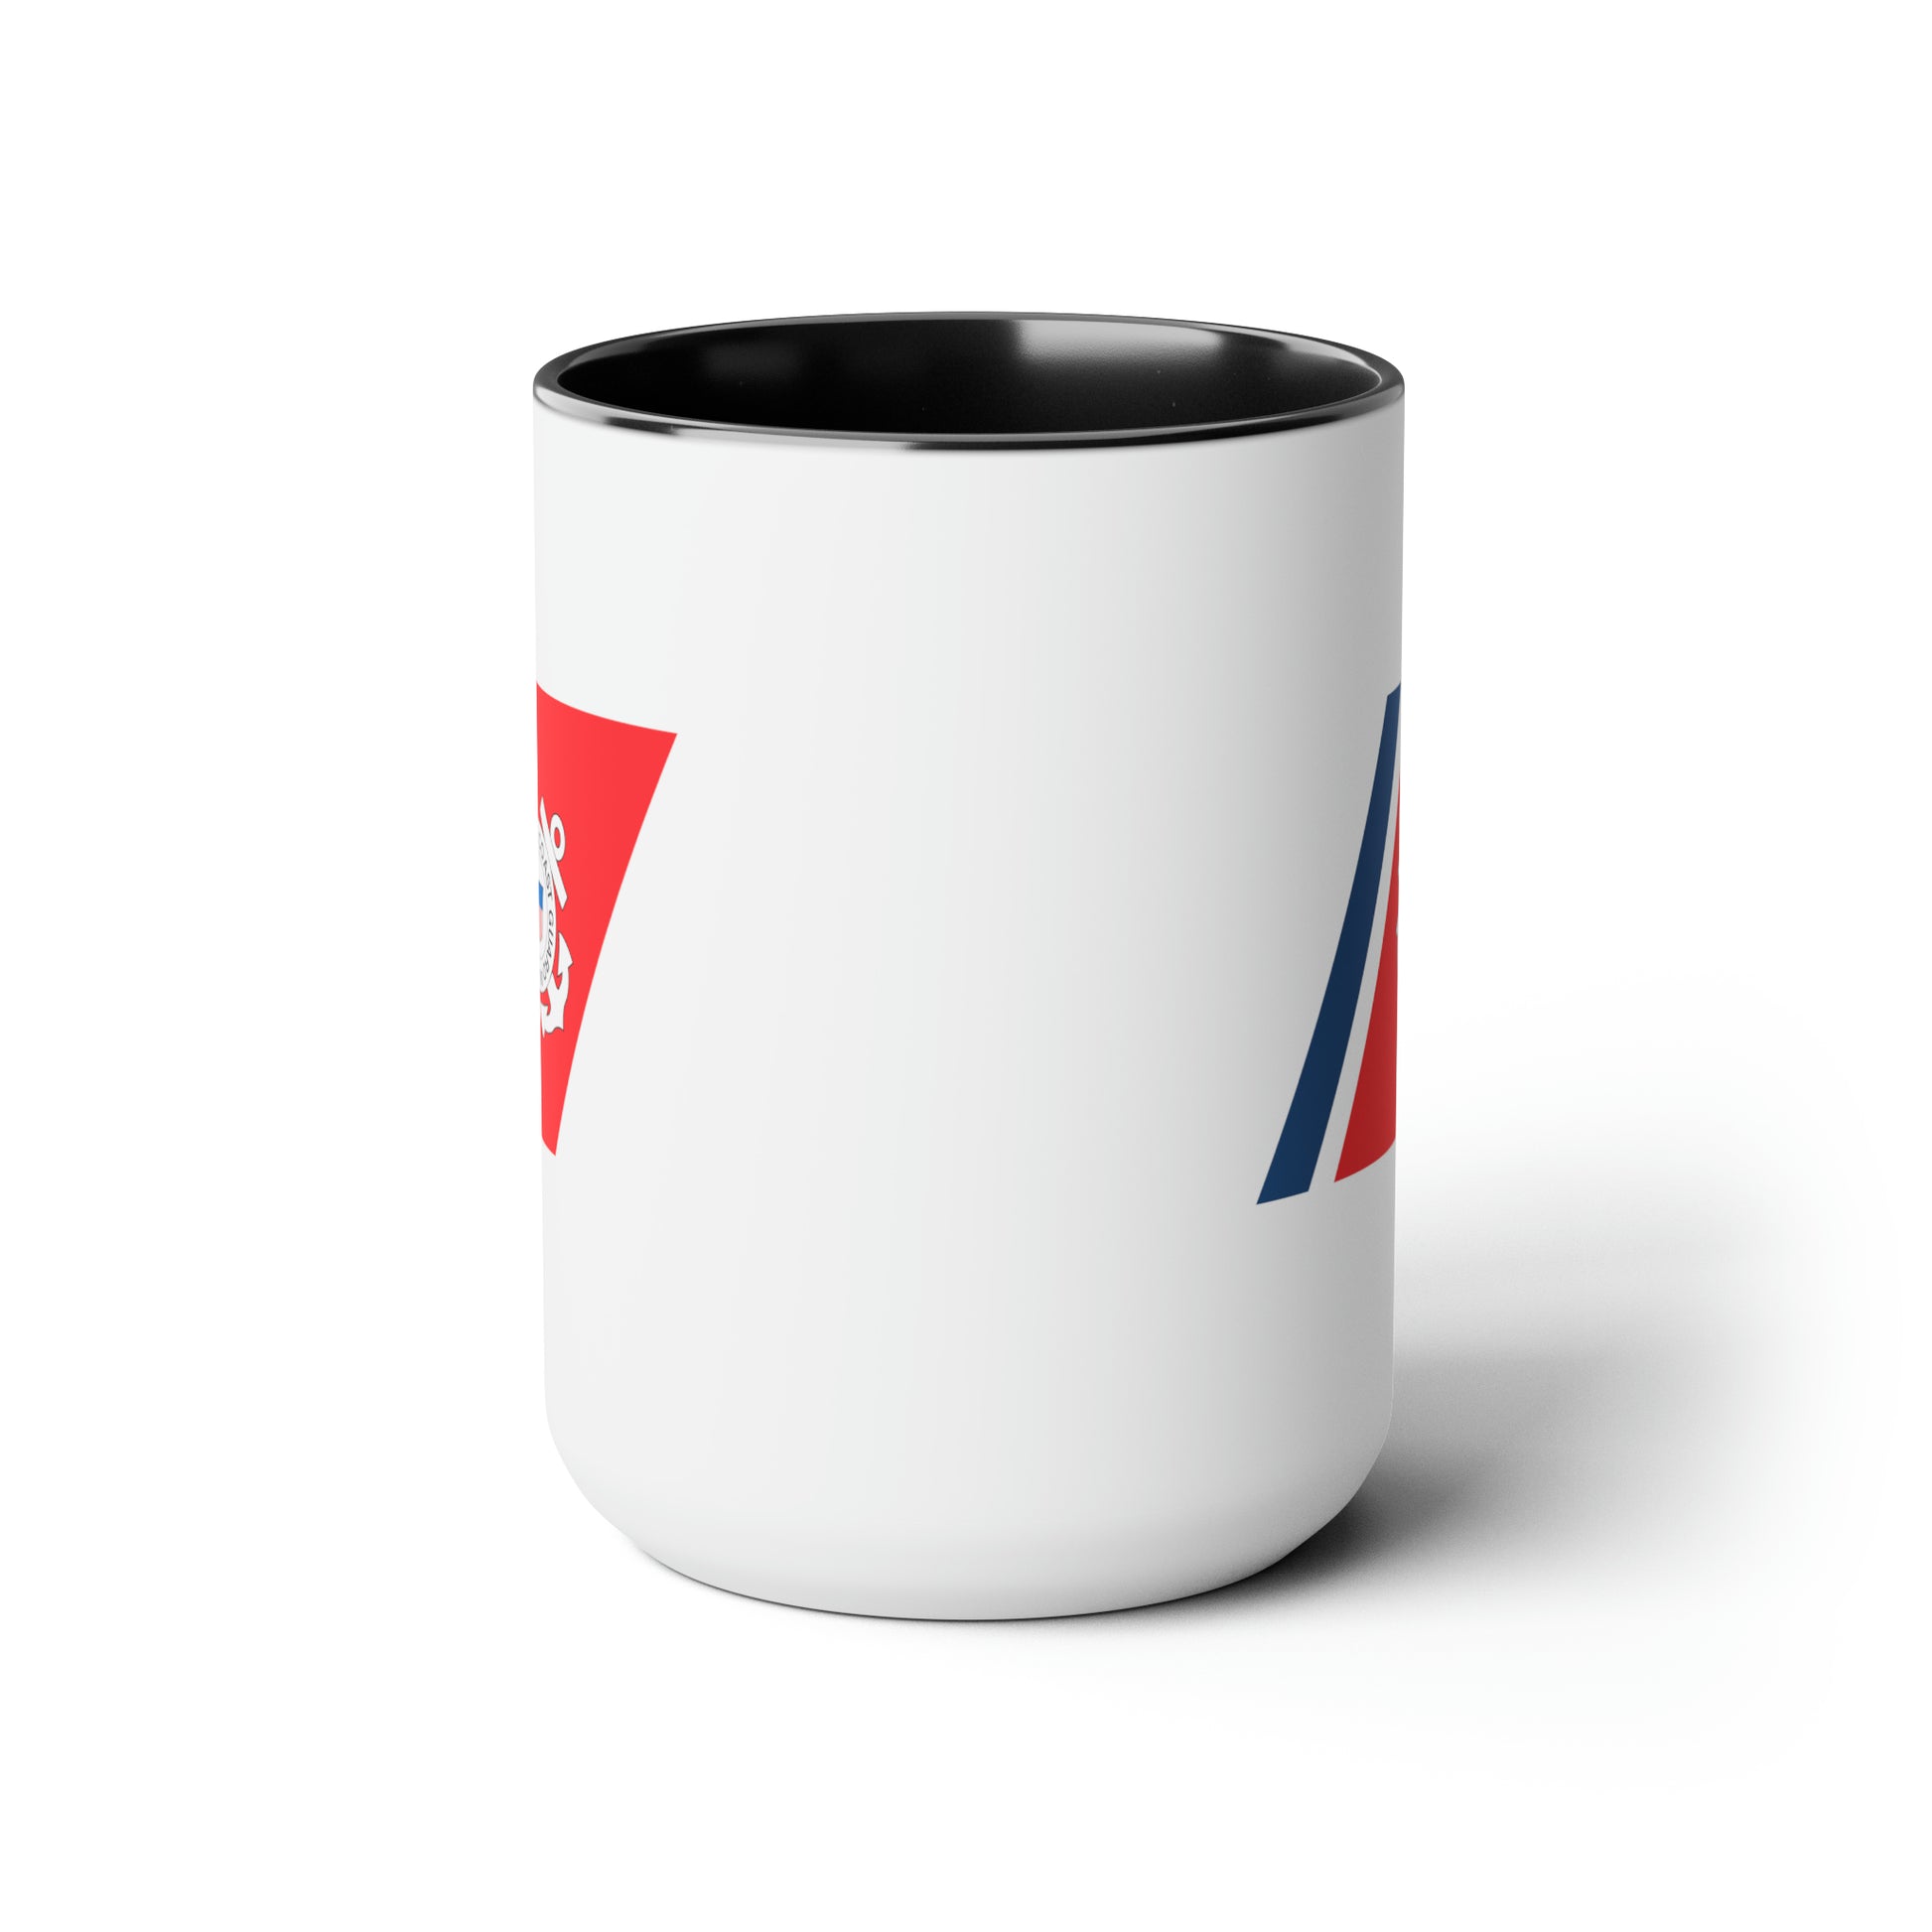 Coast Guard Hull Crest Coffee Mug - Double Sided Black Accent White Ceramic 15oz by TheGlassyLass.com